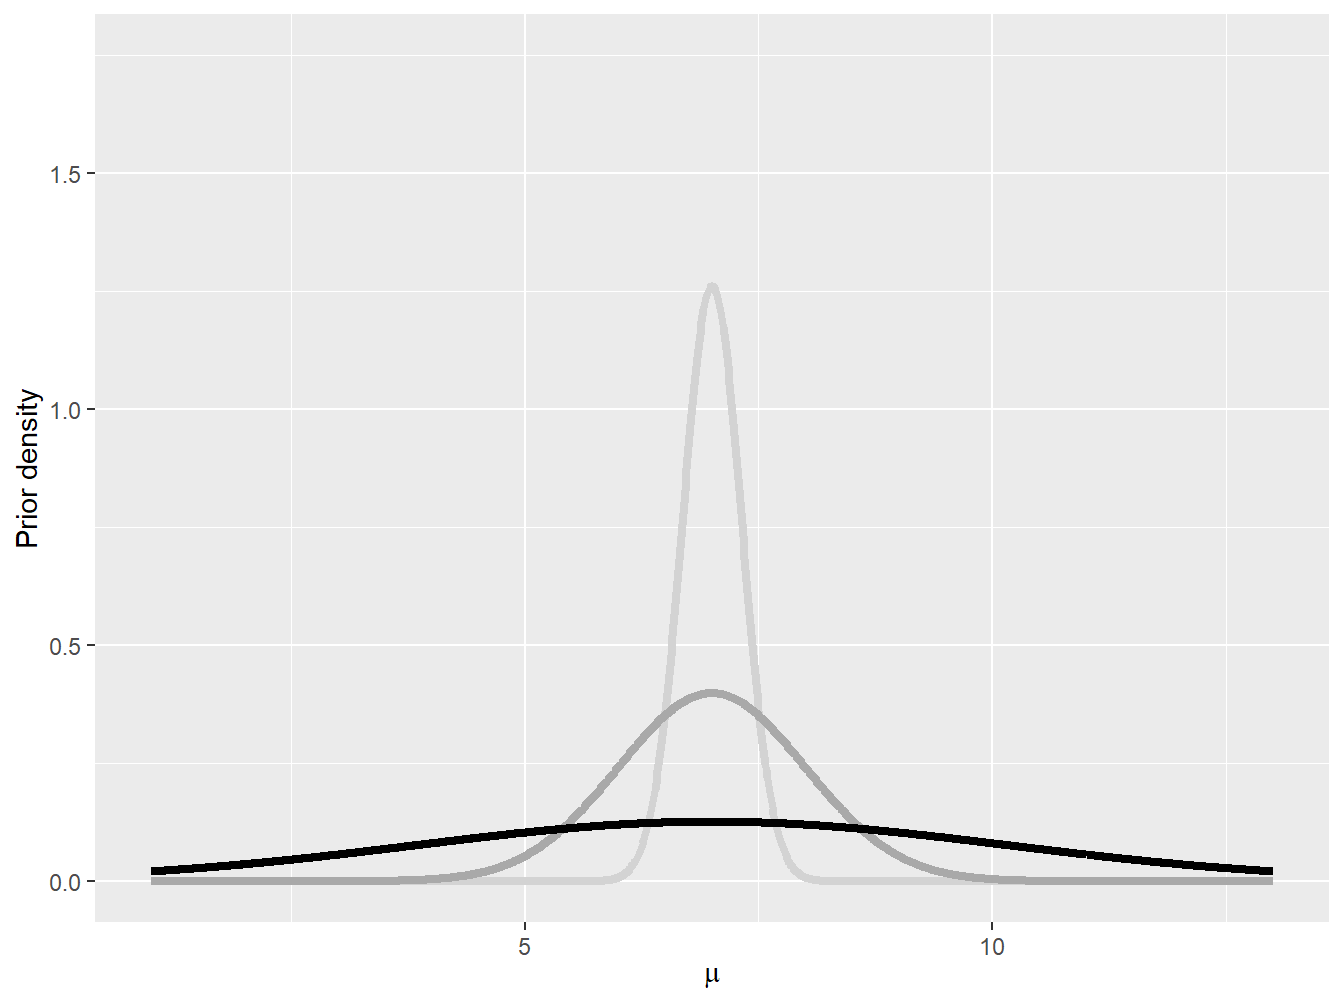 Normal prior densities: \(\tau^2 = 0.1\) (light gray), \(\tau^2=1\) (gray), and \(\tau^2 = 10\) (black)